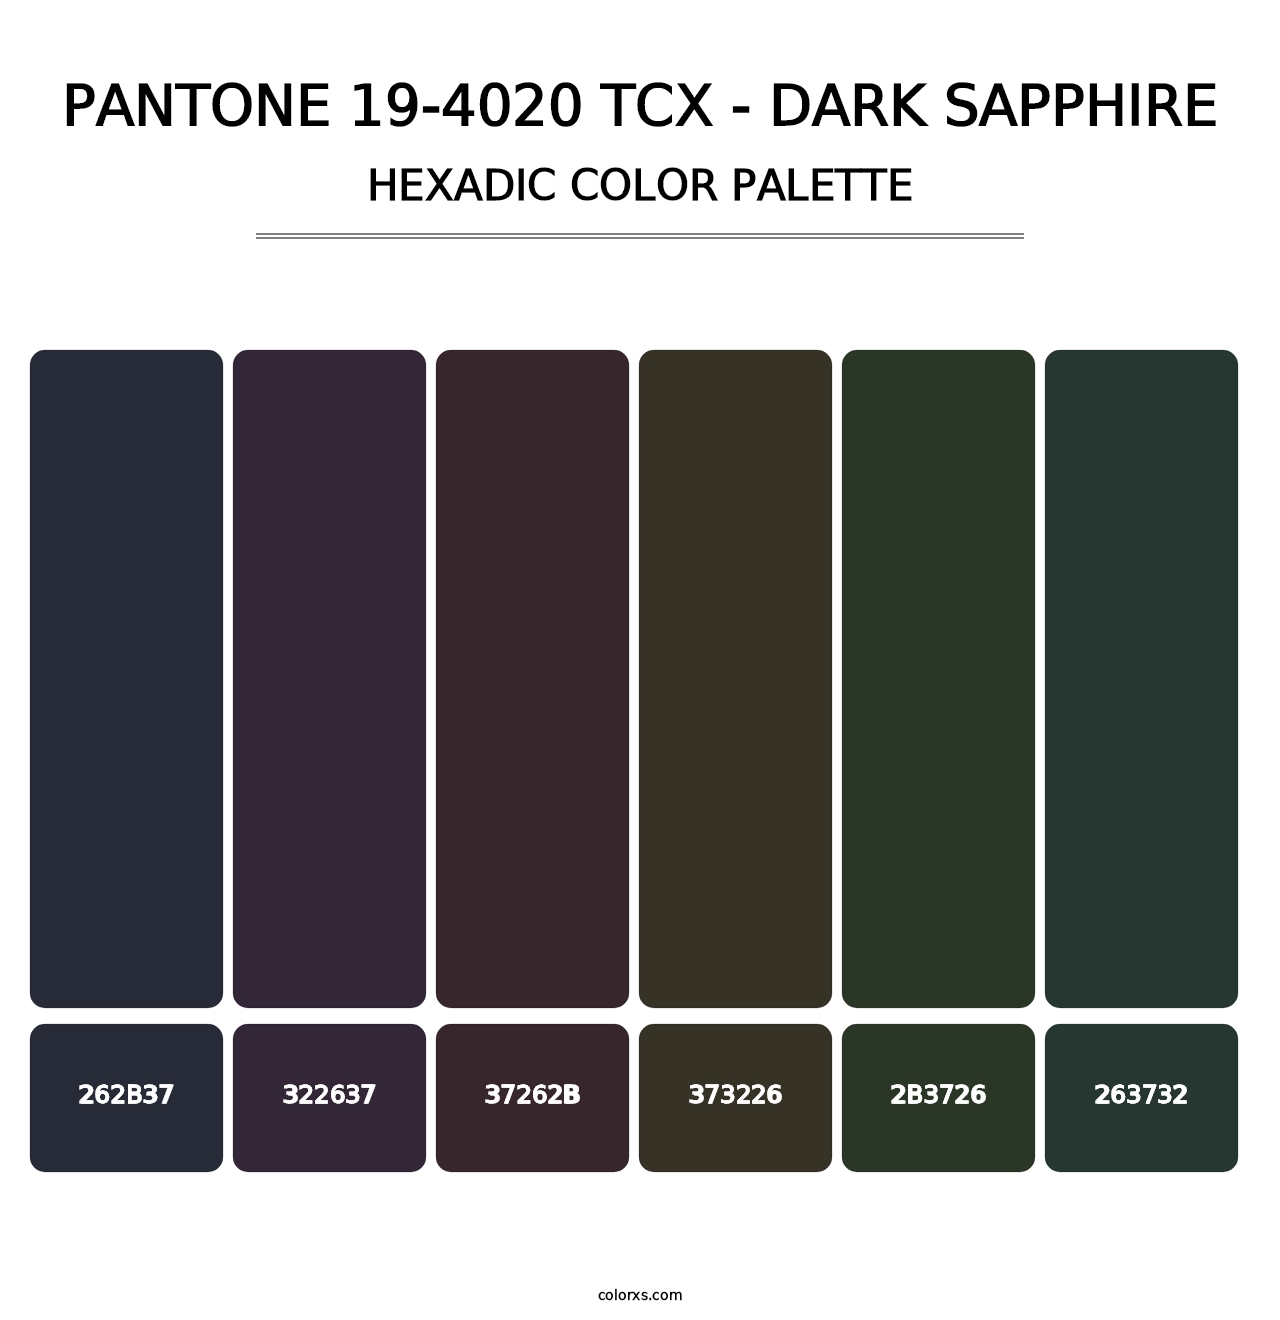 PANTONE 19-4020 TCX - Dark Sapphire - Hexadic Color Palette